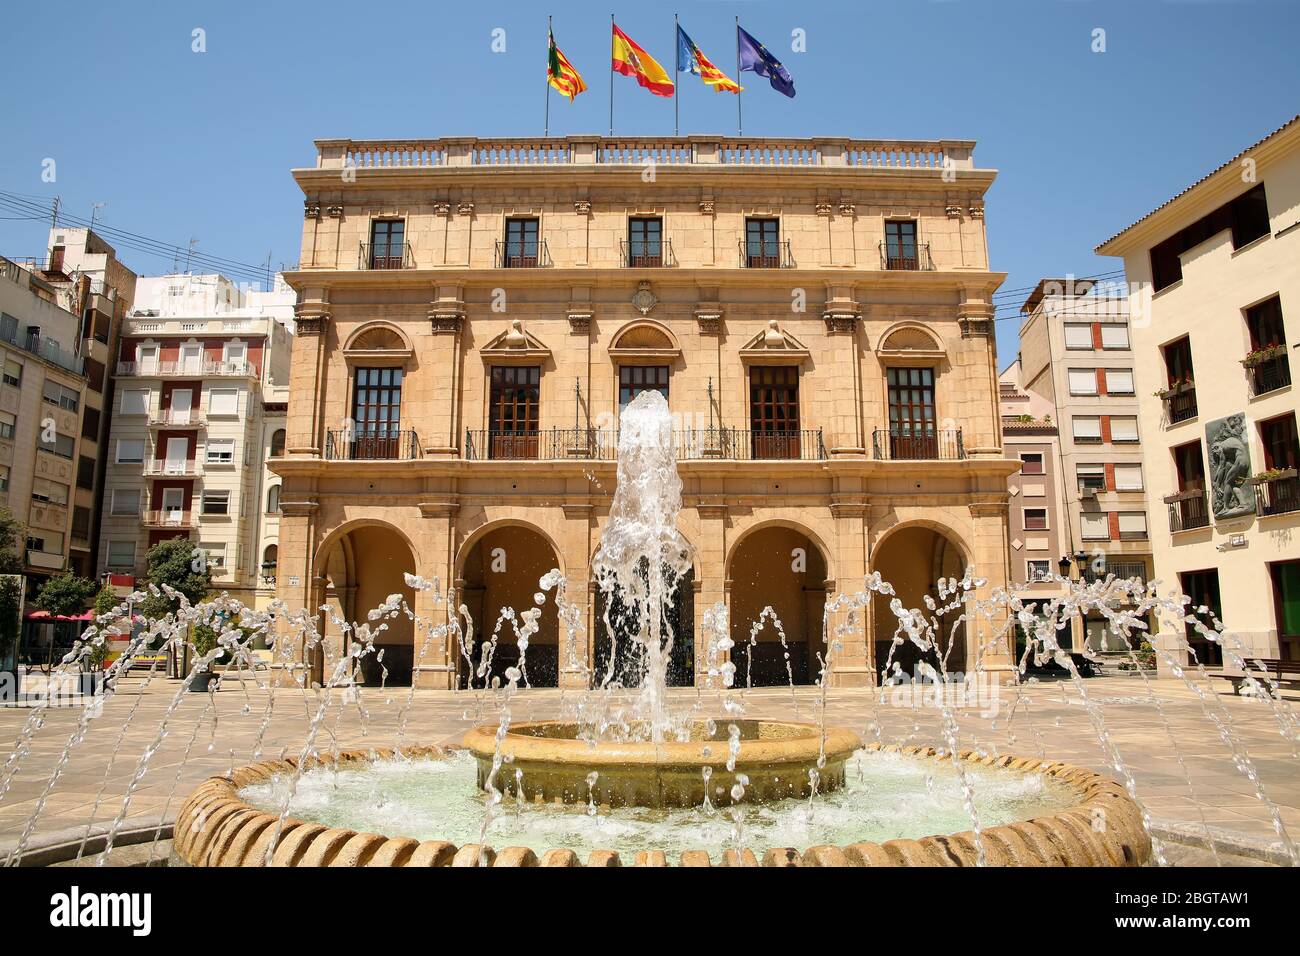 Castellón City Council or Palau Municipal located in plaza mayor, city of Castellón de la Plana, Valencia, Spain. Stock Photo